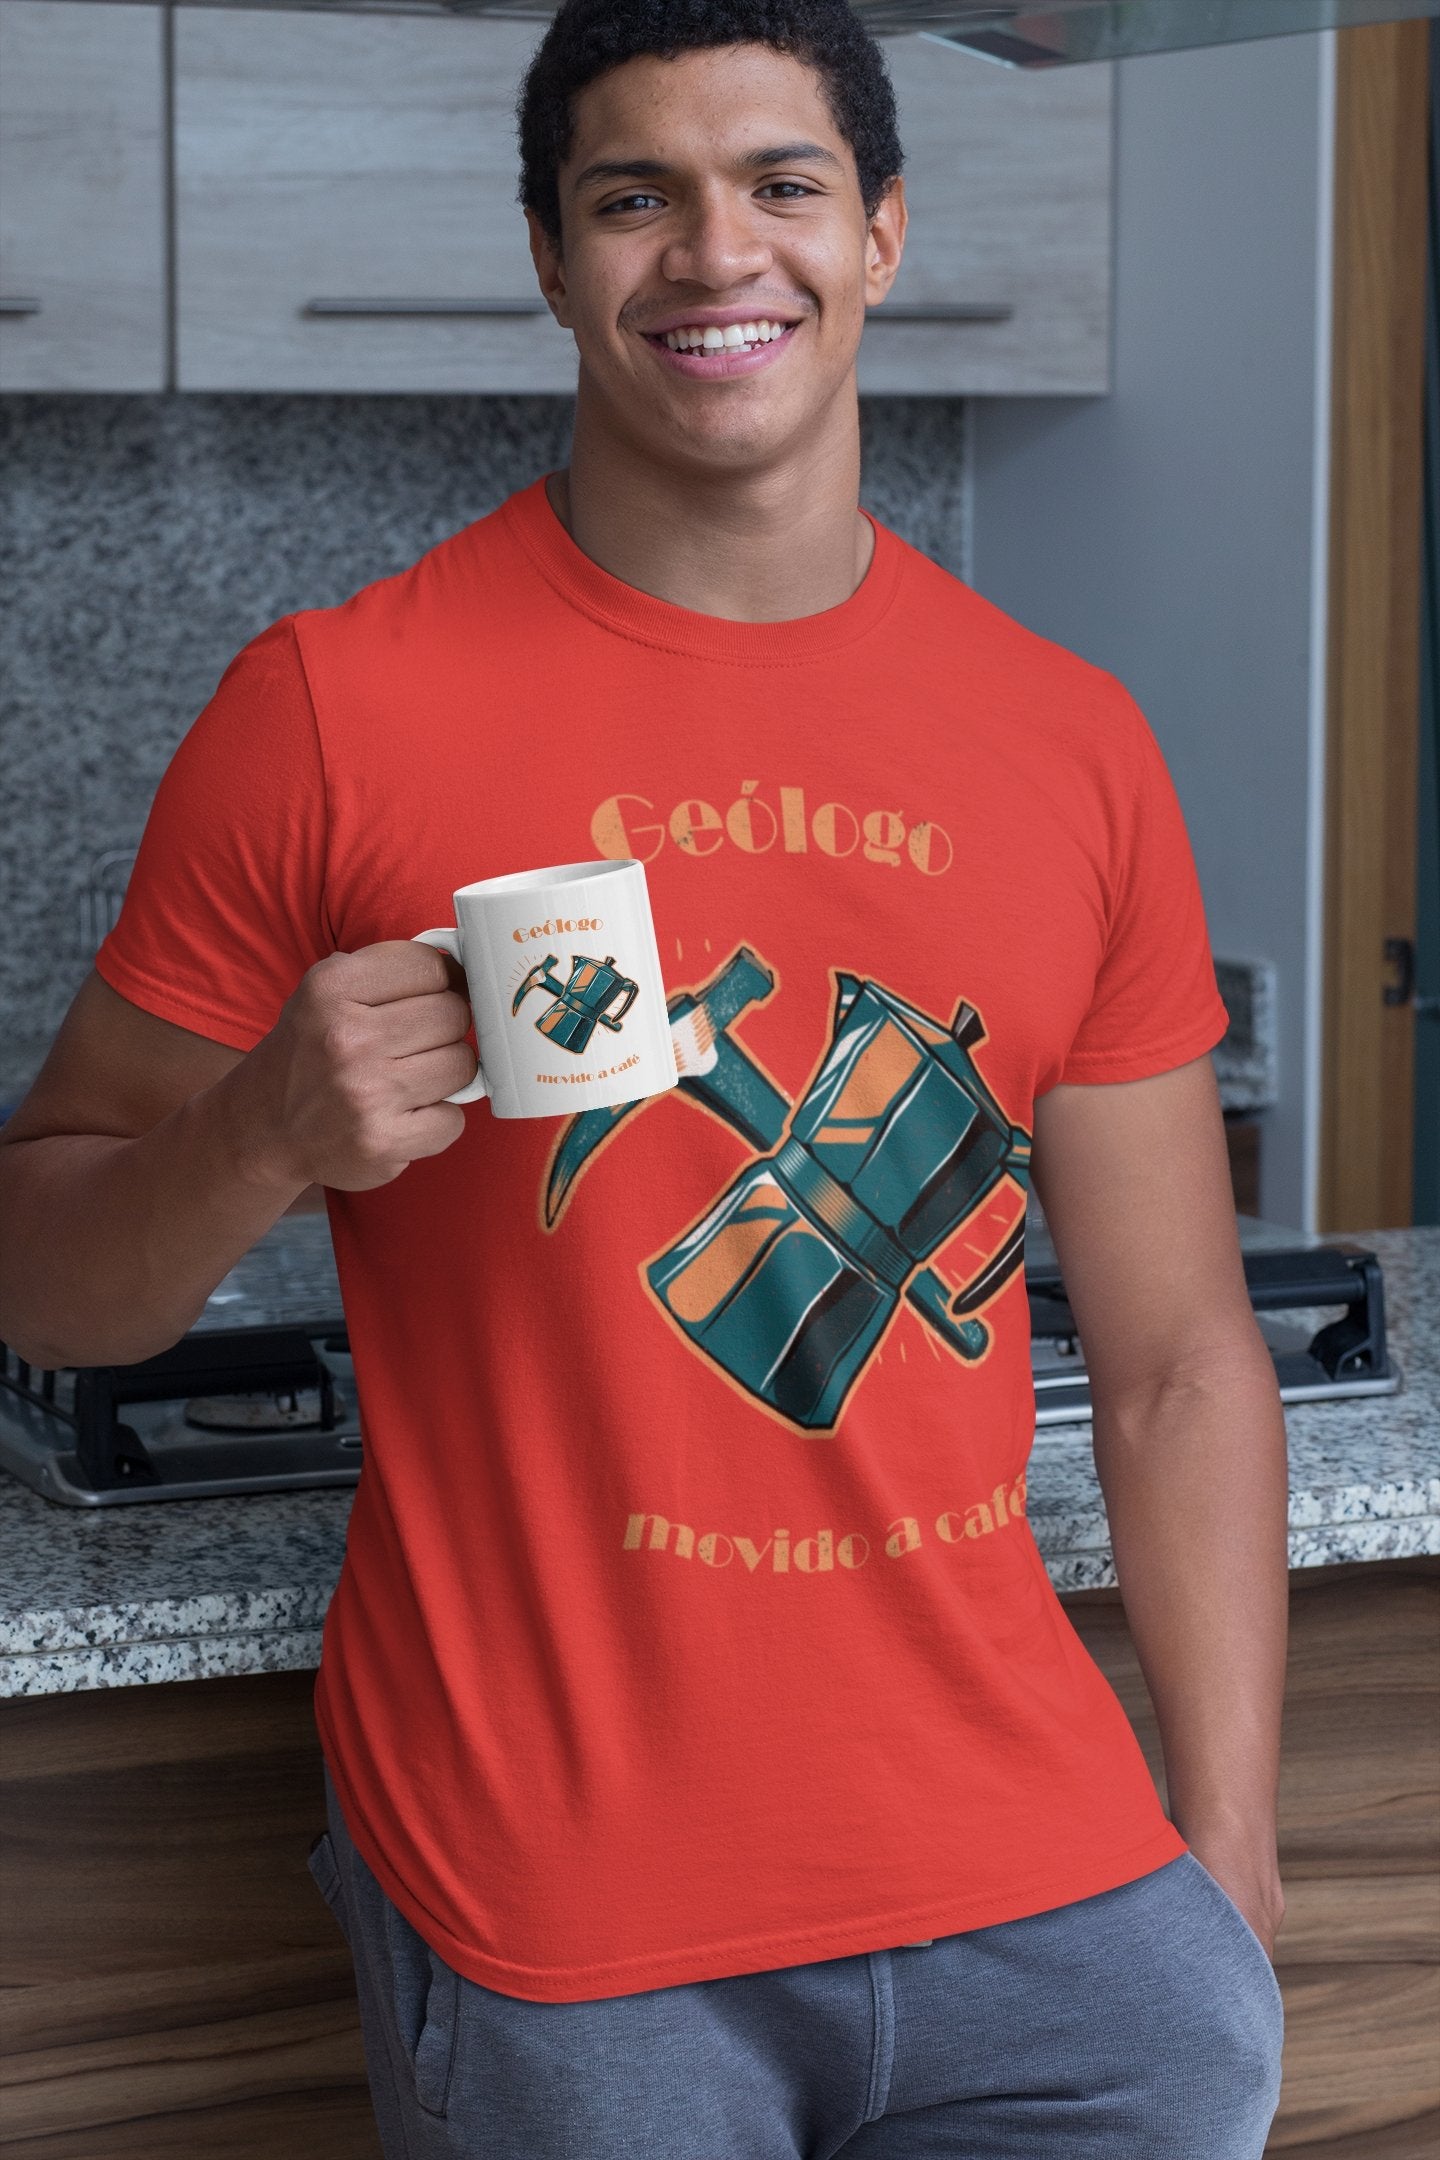 Camiseta Geólogo Movido a Café - Masculino -camiseta- Editora Datum